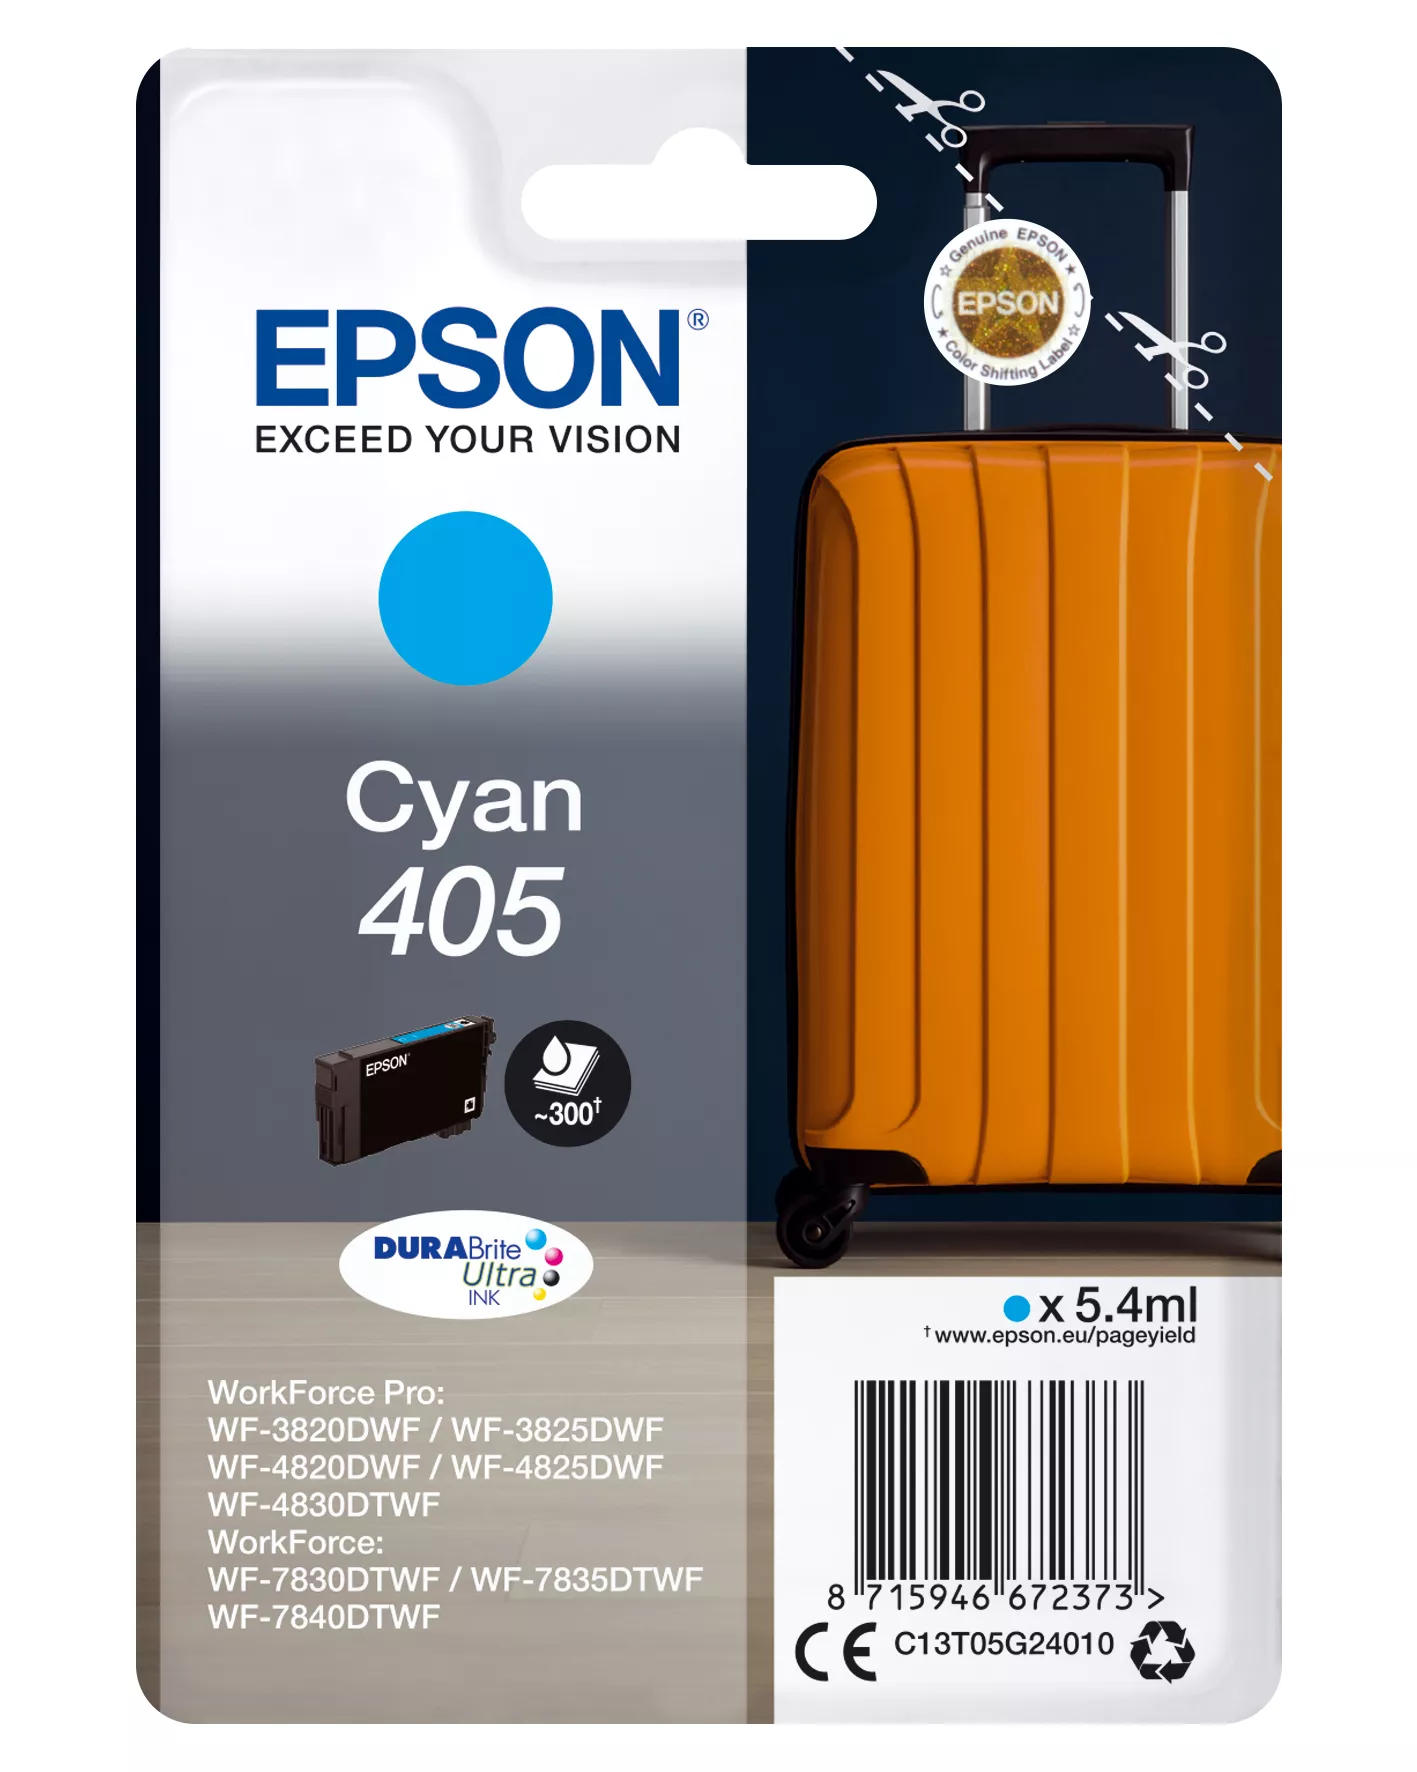 Achat Epson Singlepack Cyan 405 DURABrite Ultra Ink - 8715946672380